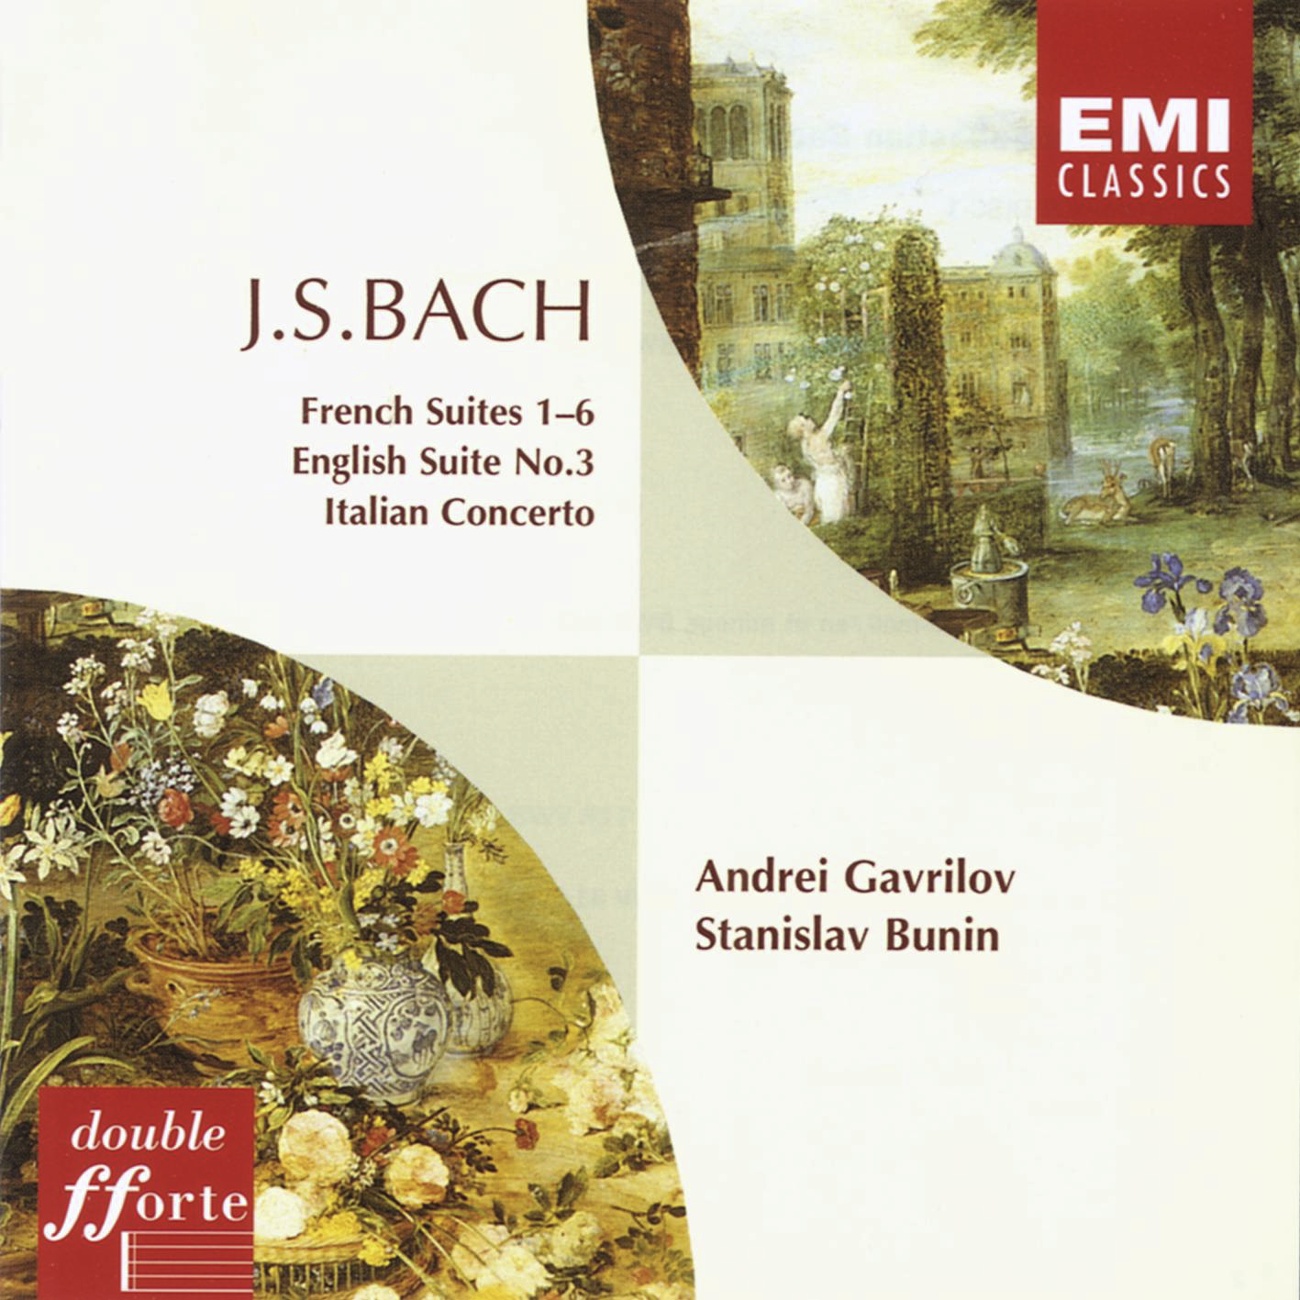 BACH: FRENCH SUITE 3 IN B-MIN, BWV 814: V. MENUET - TRIO - MENUET